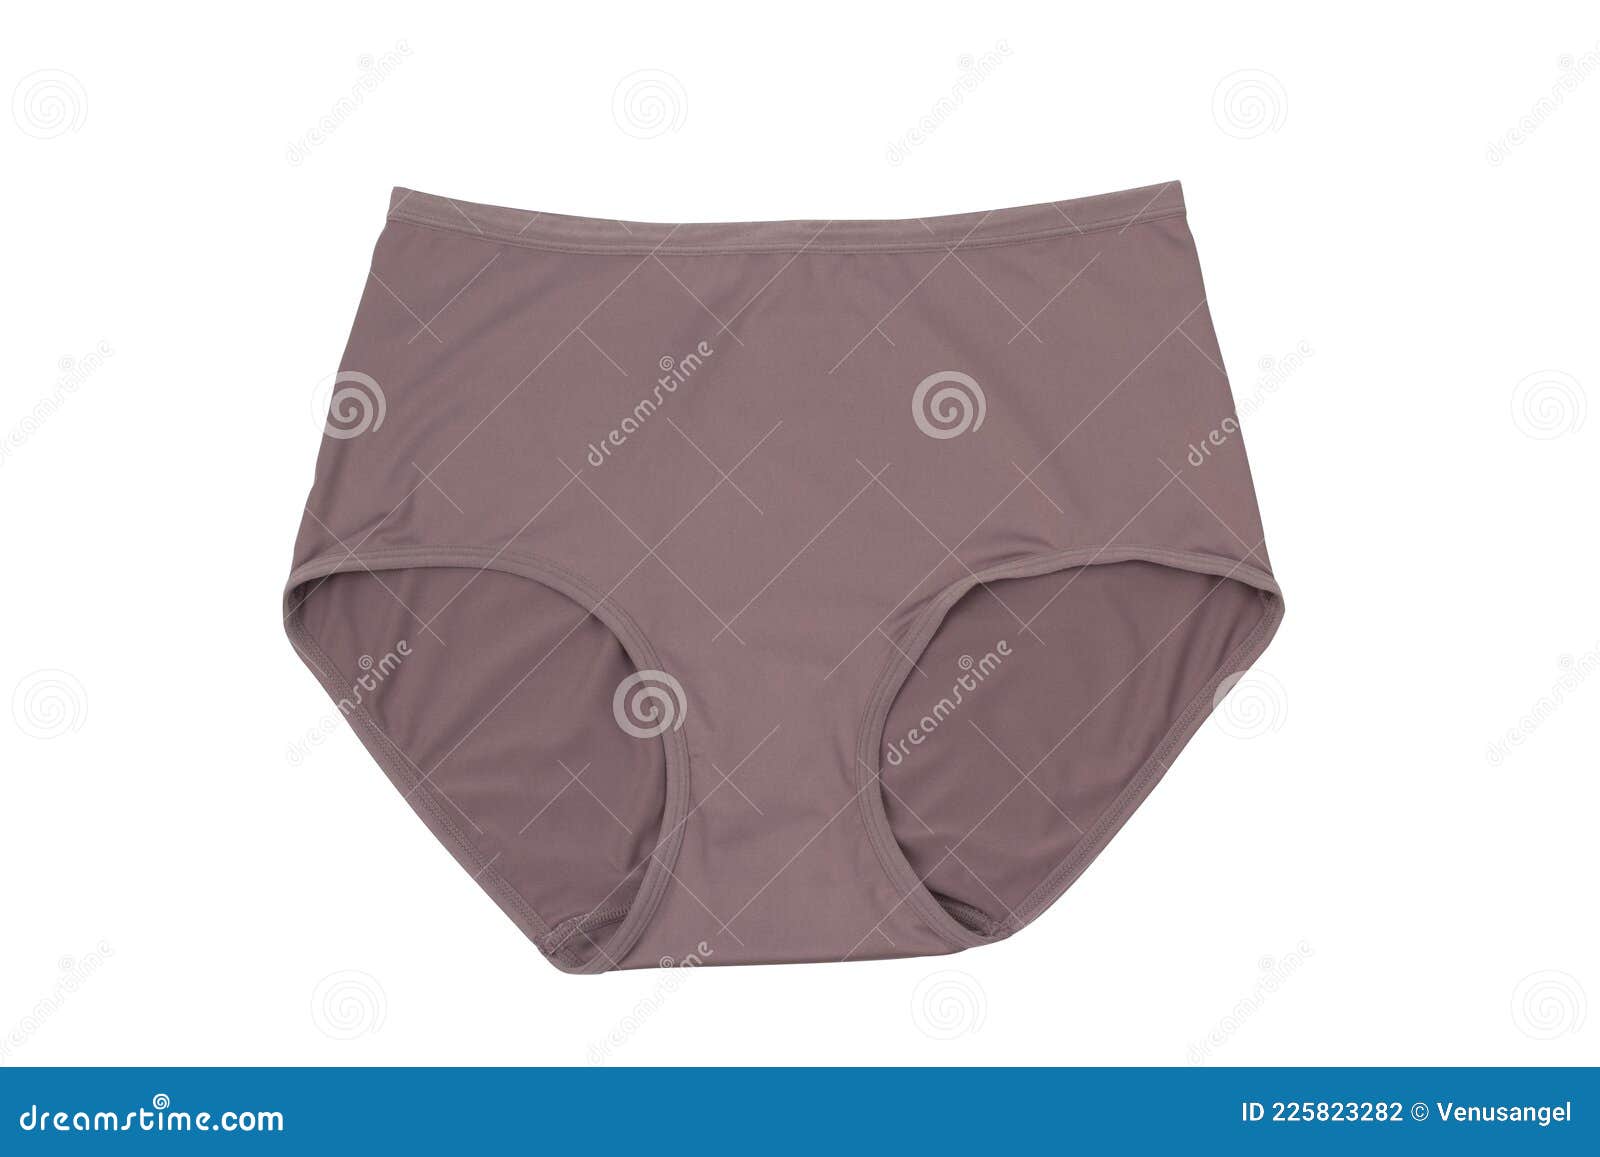 1,260 Brown Panties Stock Photos - Free & Royalty-Free Stock